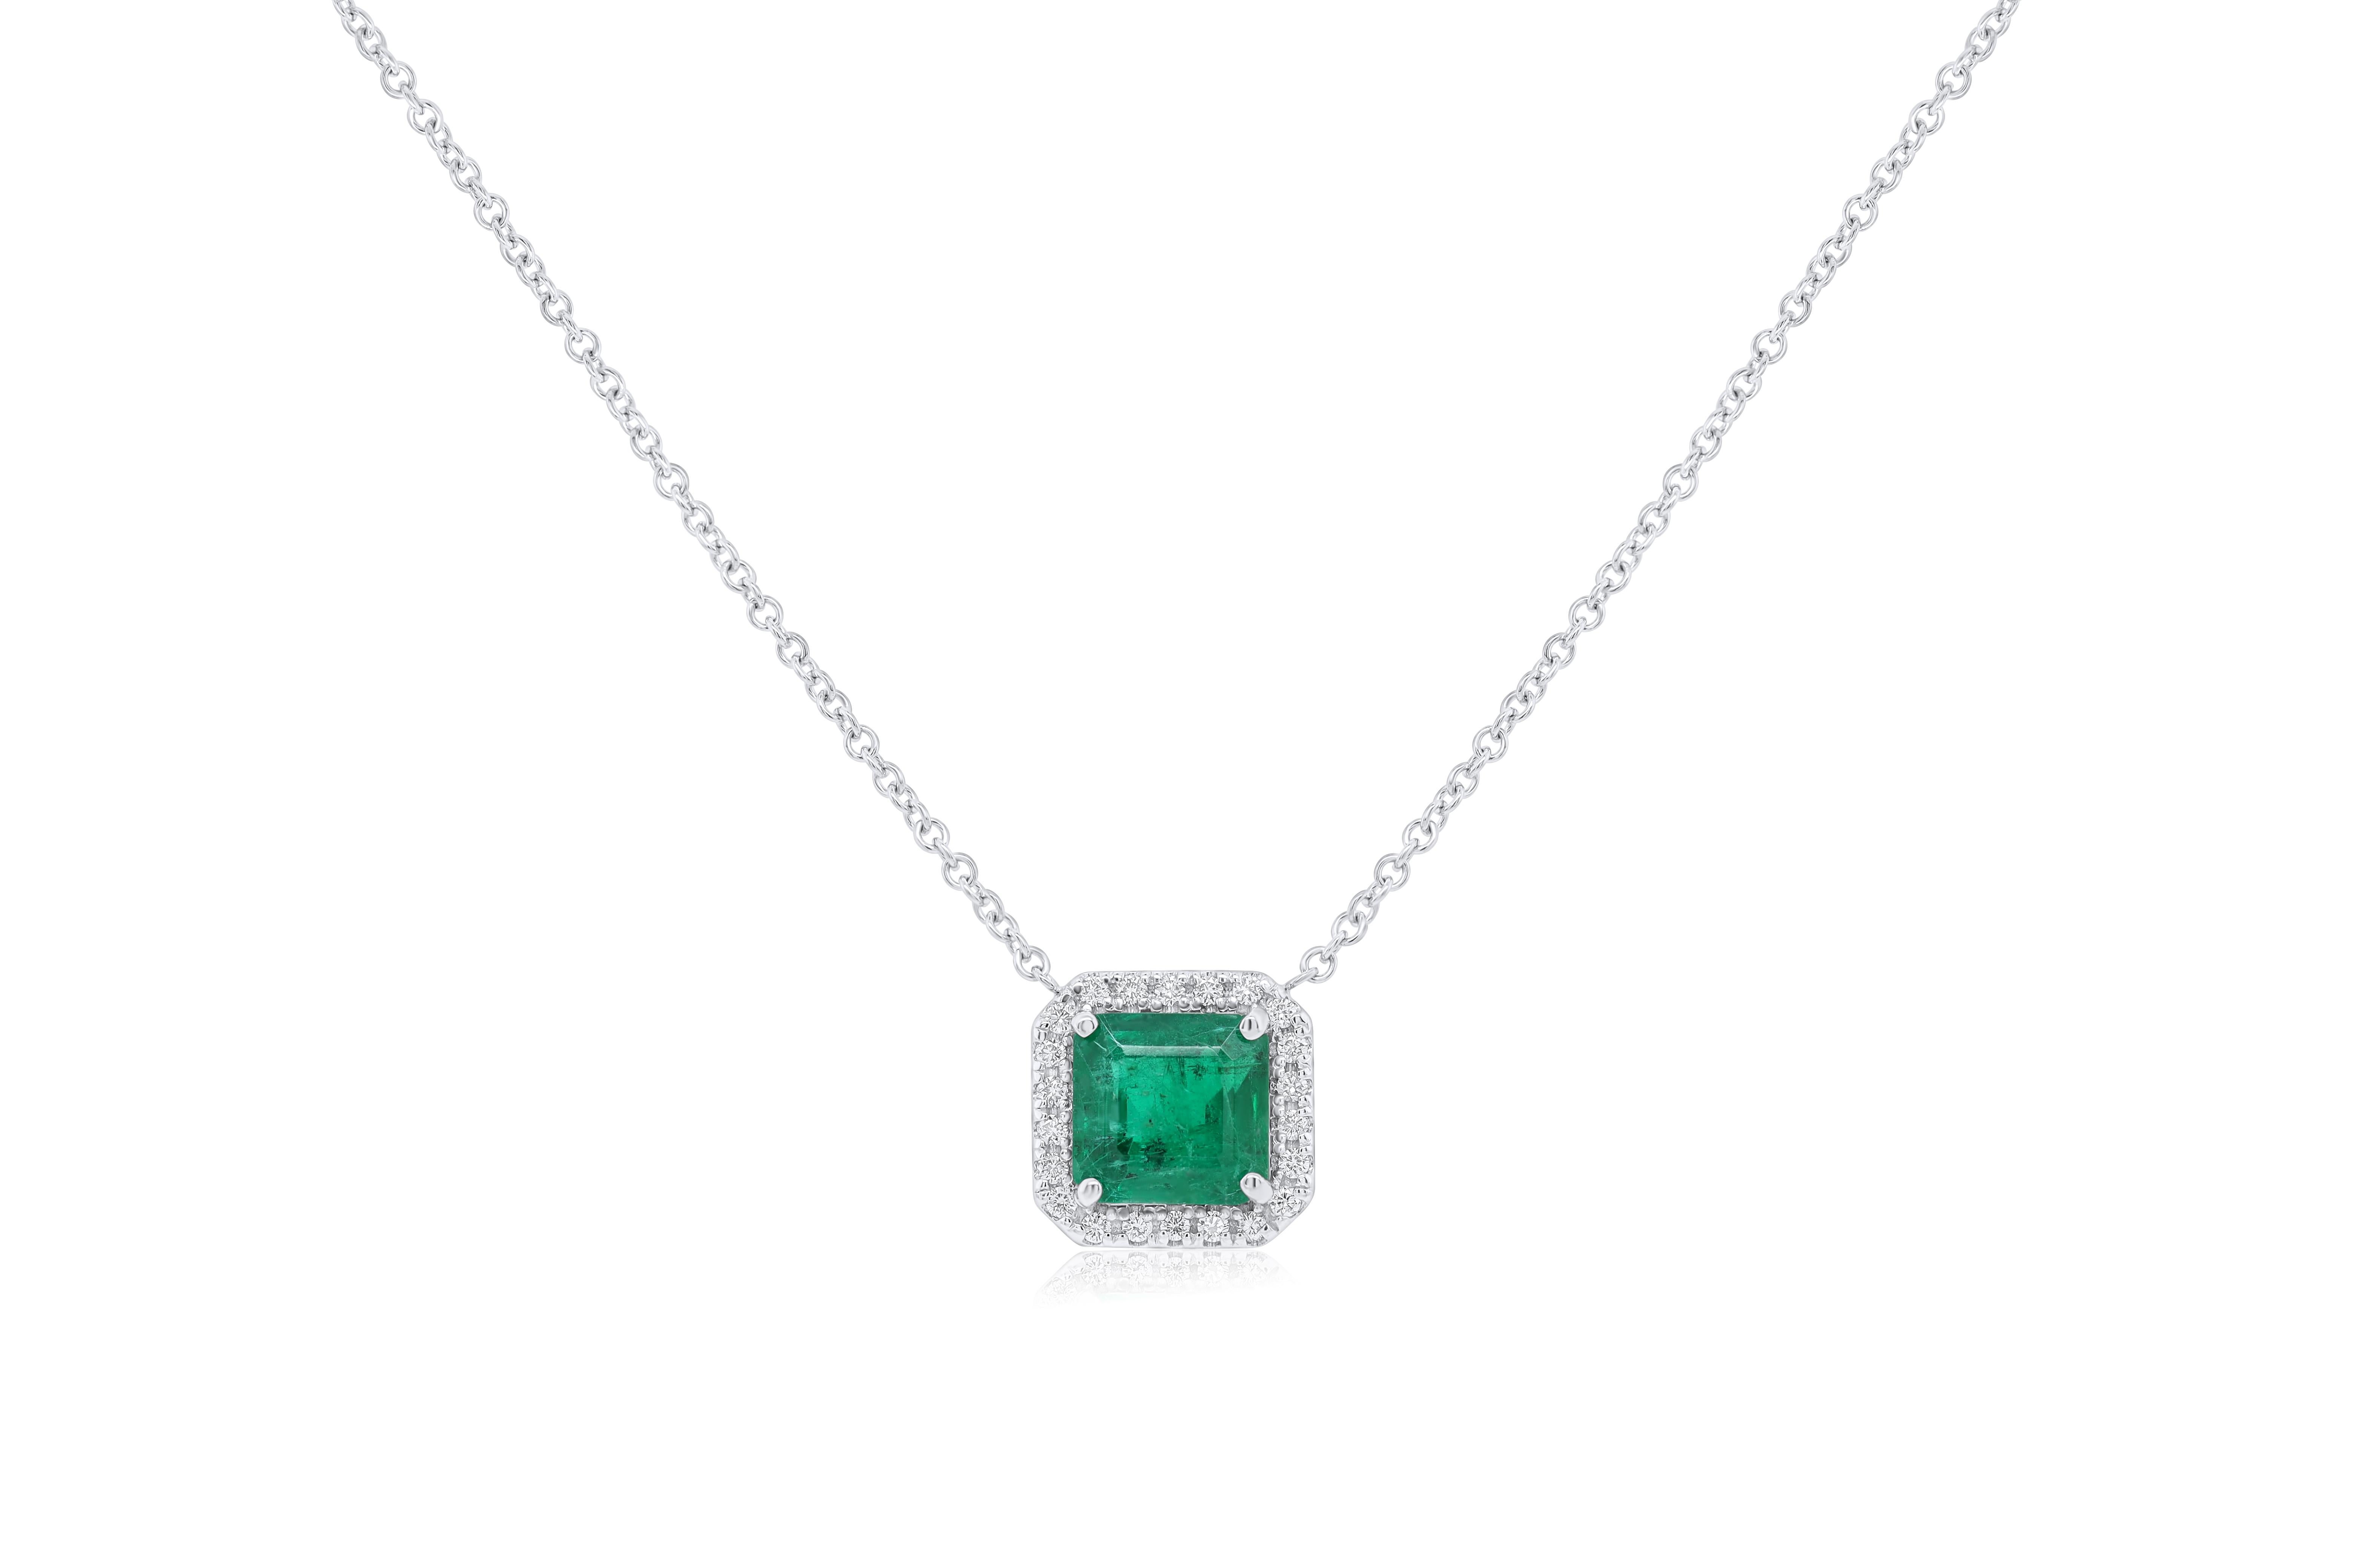 Elegant Emerald Cut Shape Green Emerald and Diamond Pendant

The center stone is 2.72 Carats Zambian Emerald cut Emerald, certified by Swiss Lab.

Surrounded by 0.30 Carats of round brilliant cut diamonds.

